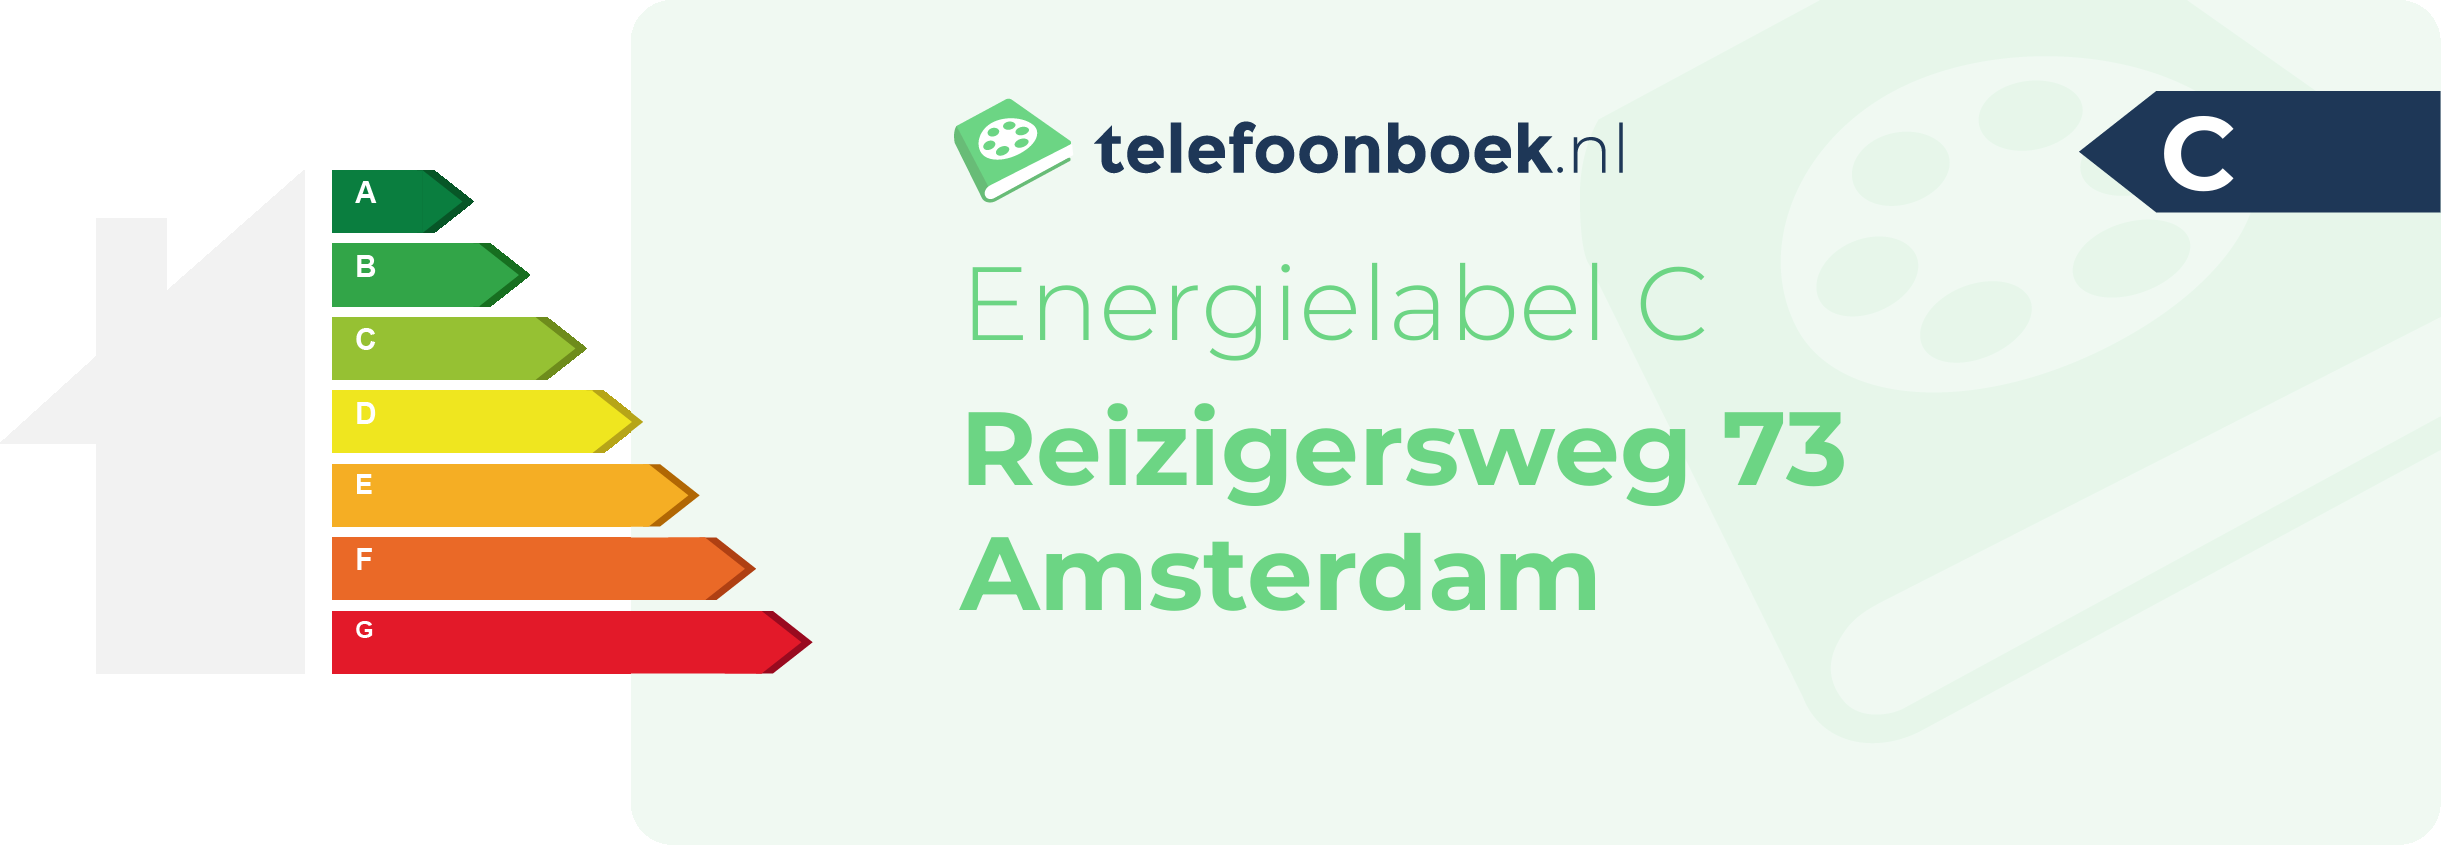 Energielabel Reizigersweg 73 Amsterdam